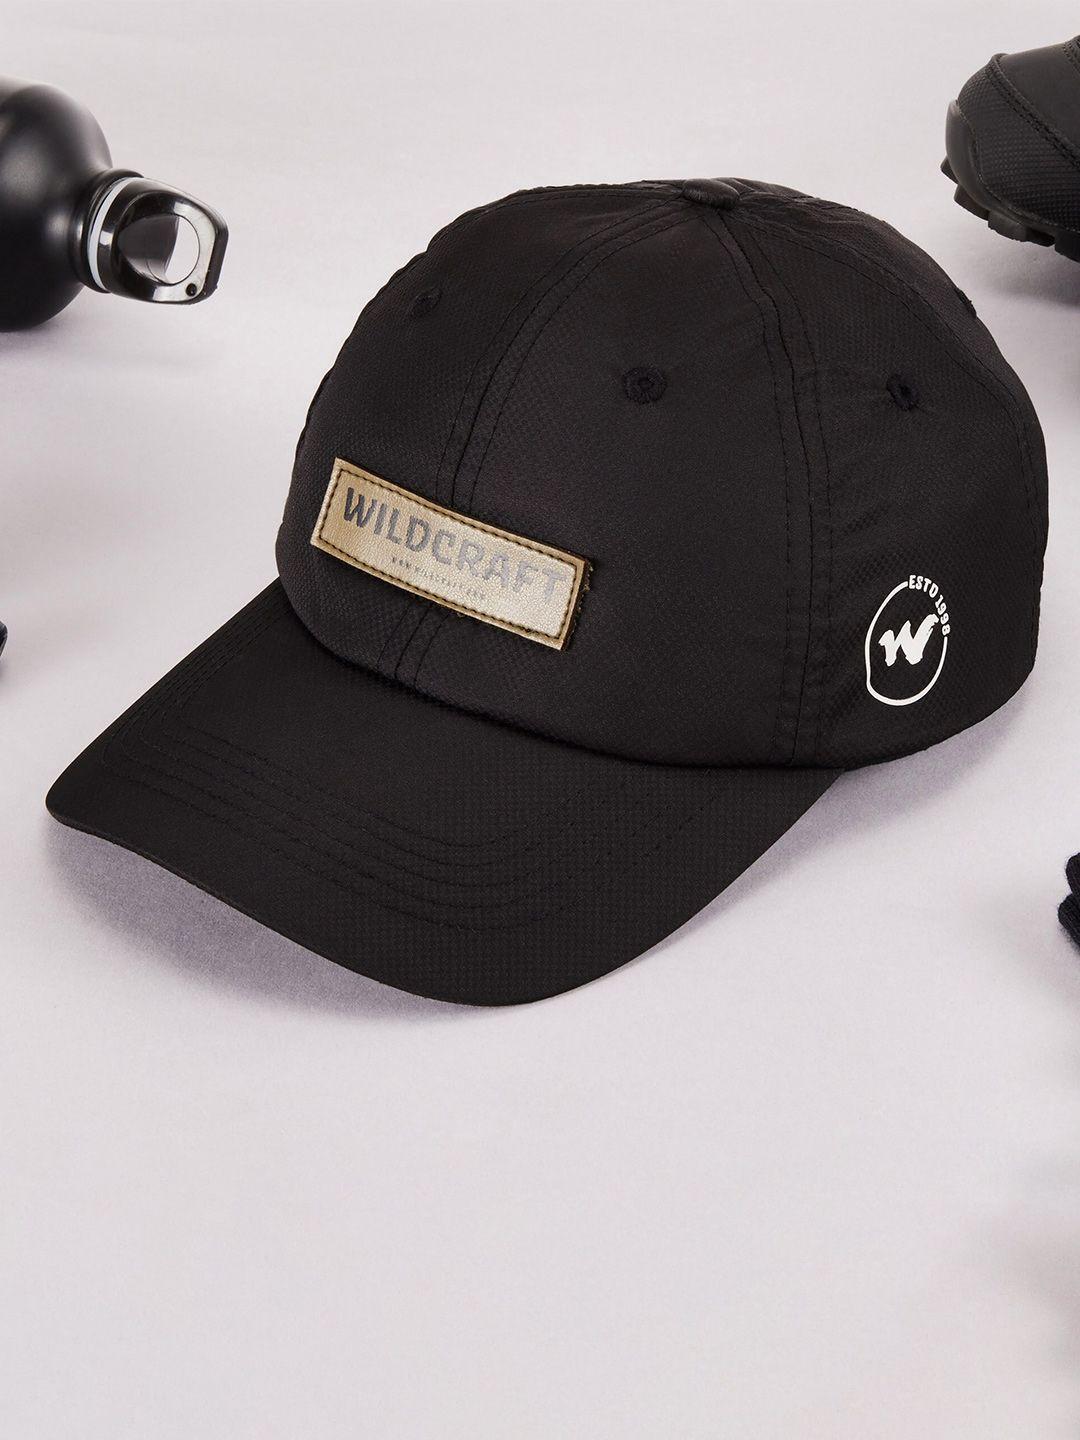 wildcraft adults black & brown brand printed cotton baseball cap